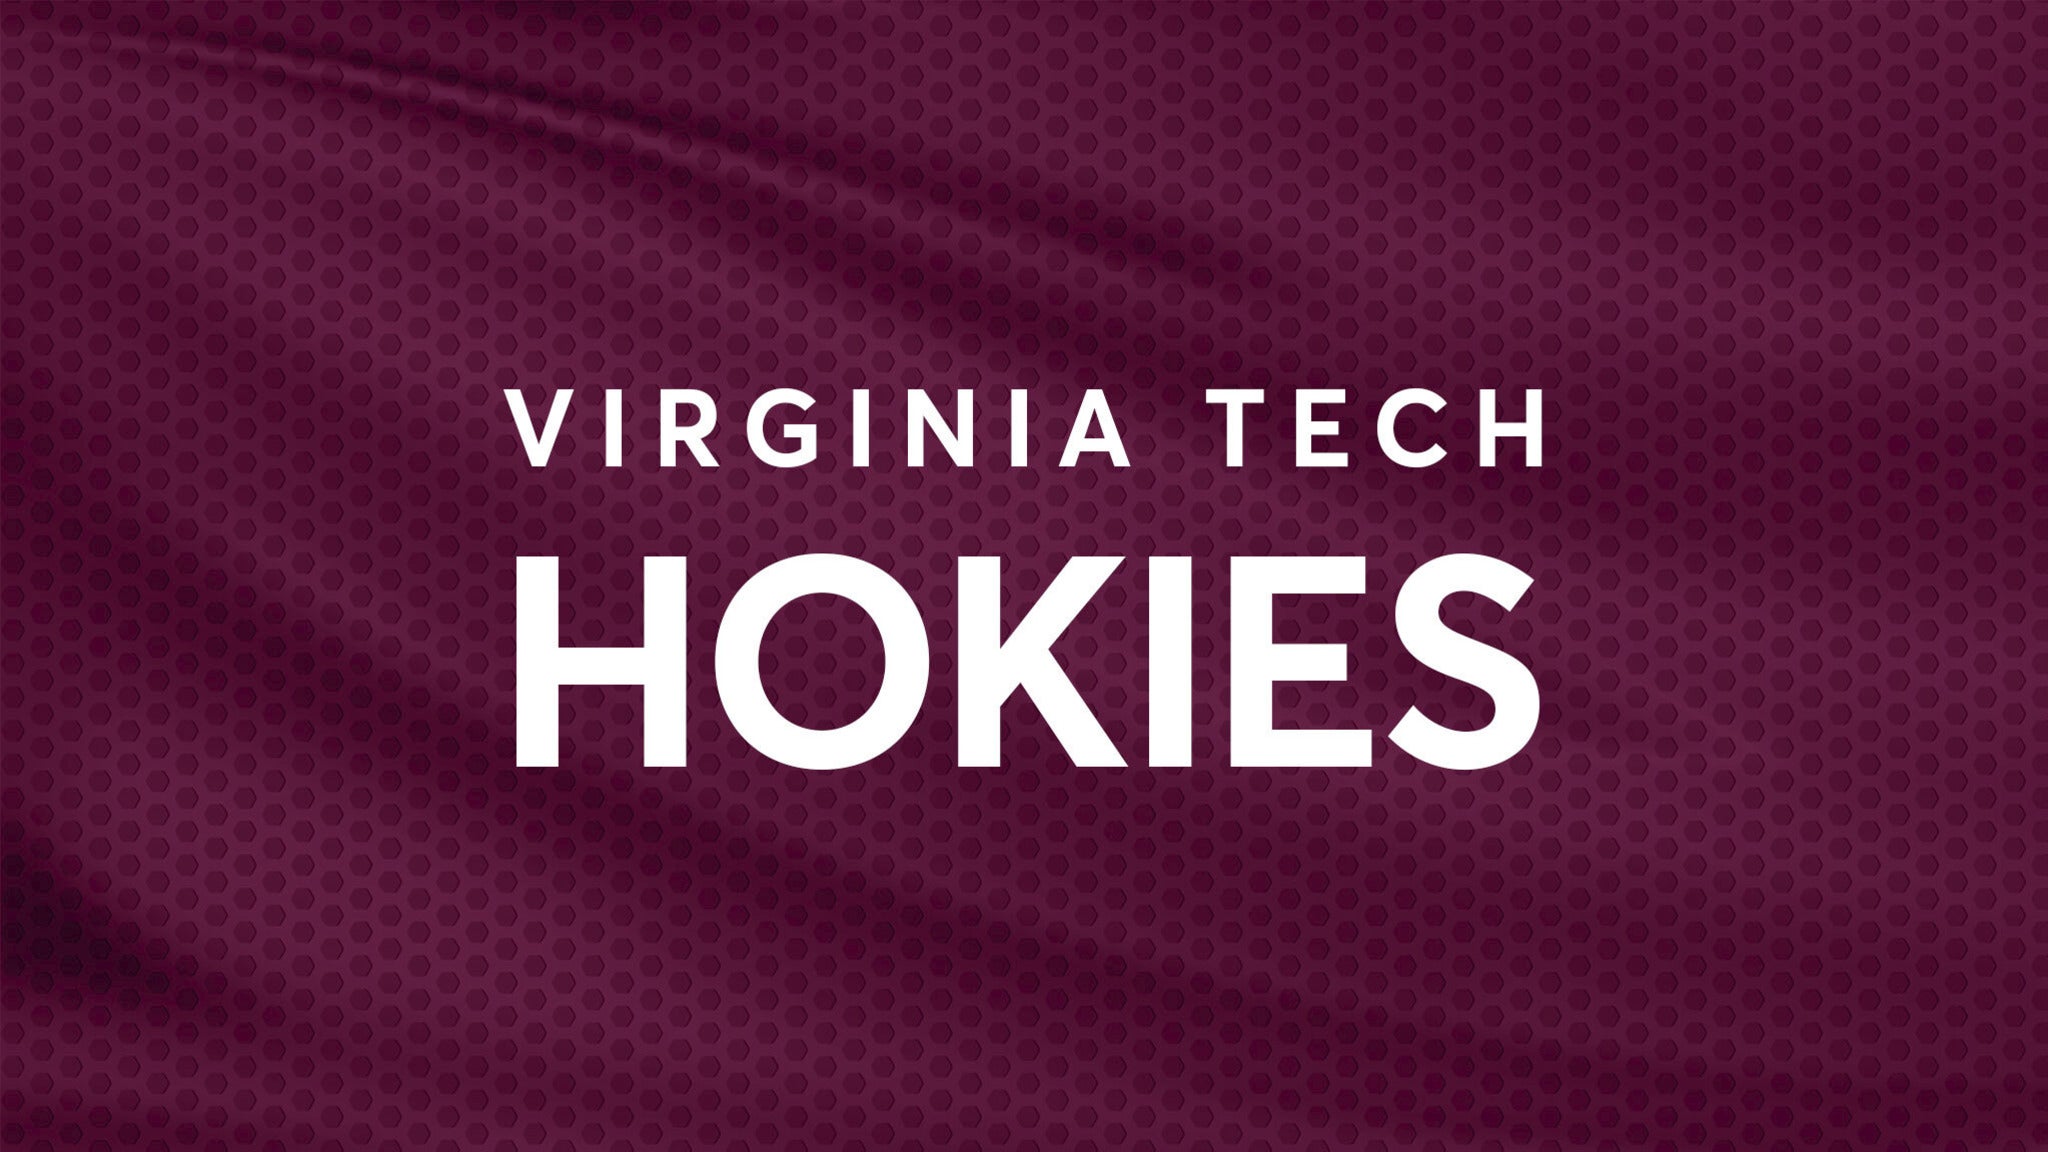 Virginia Tech Hokies Mens Basketball Tickets 2021 College Tickets Schedule Ticketmaster